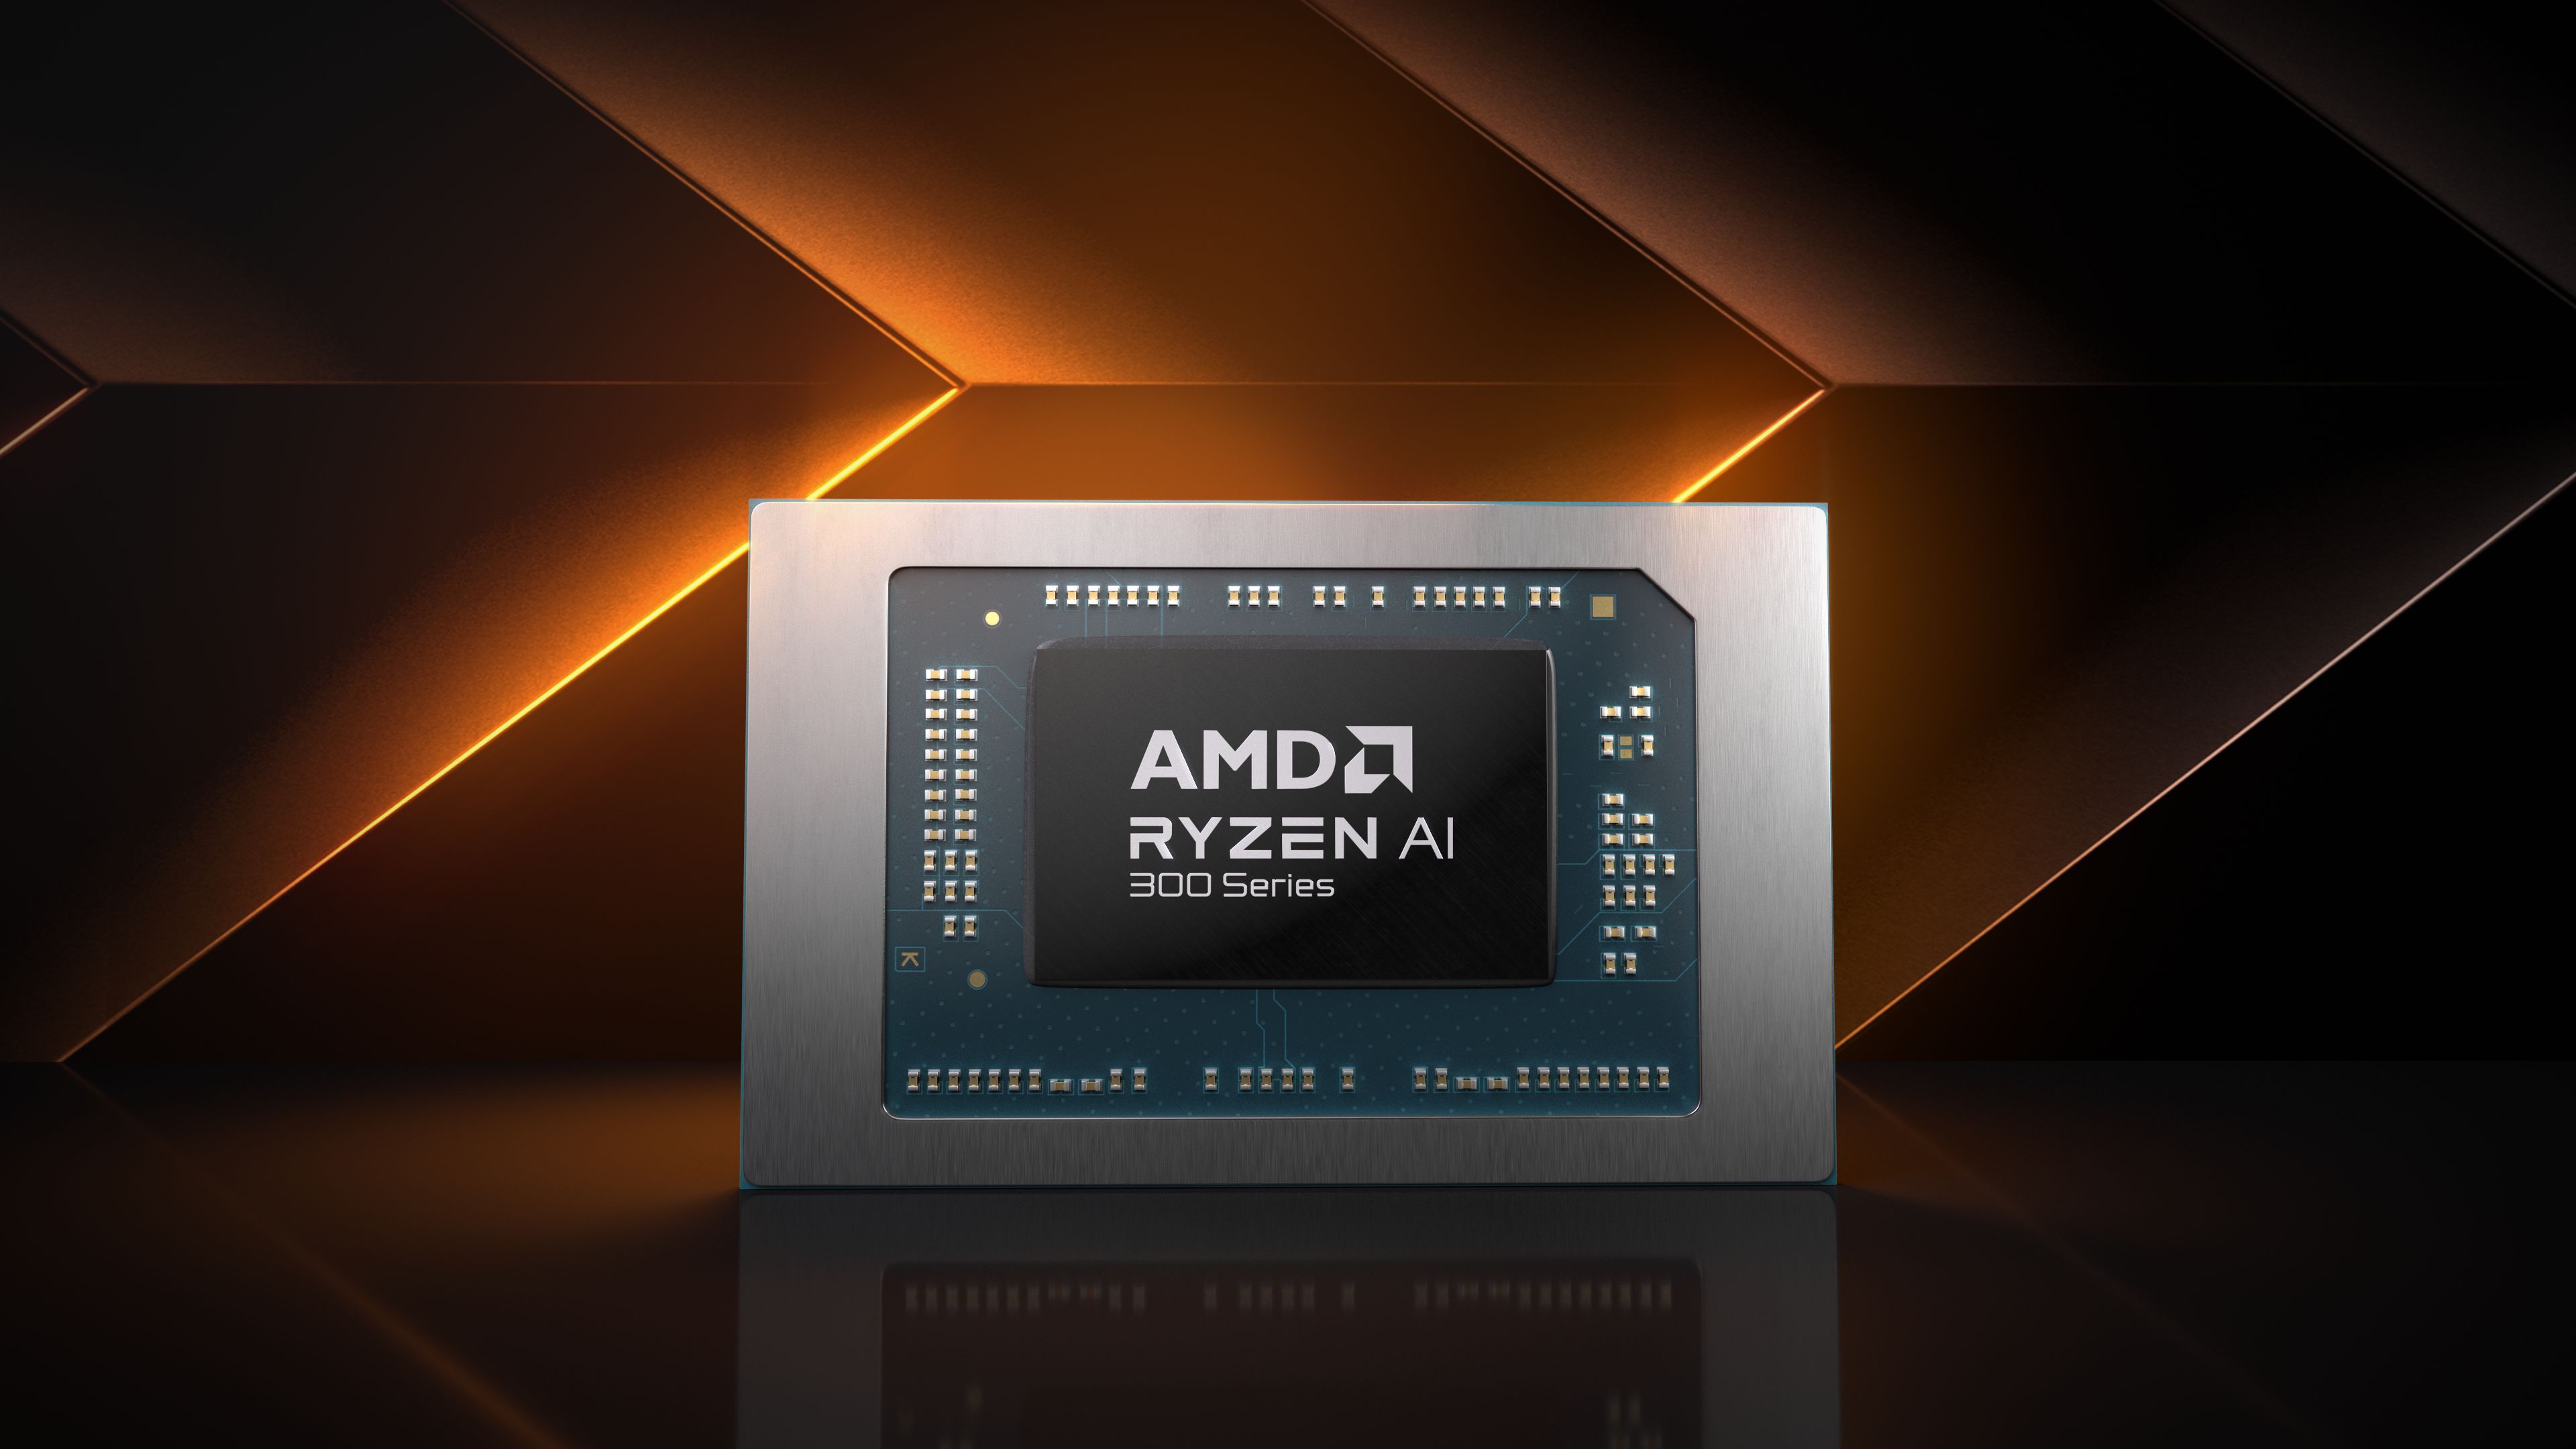 AMD Ryzen AI 300 Series Processor